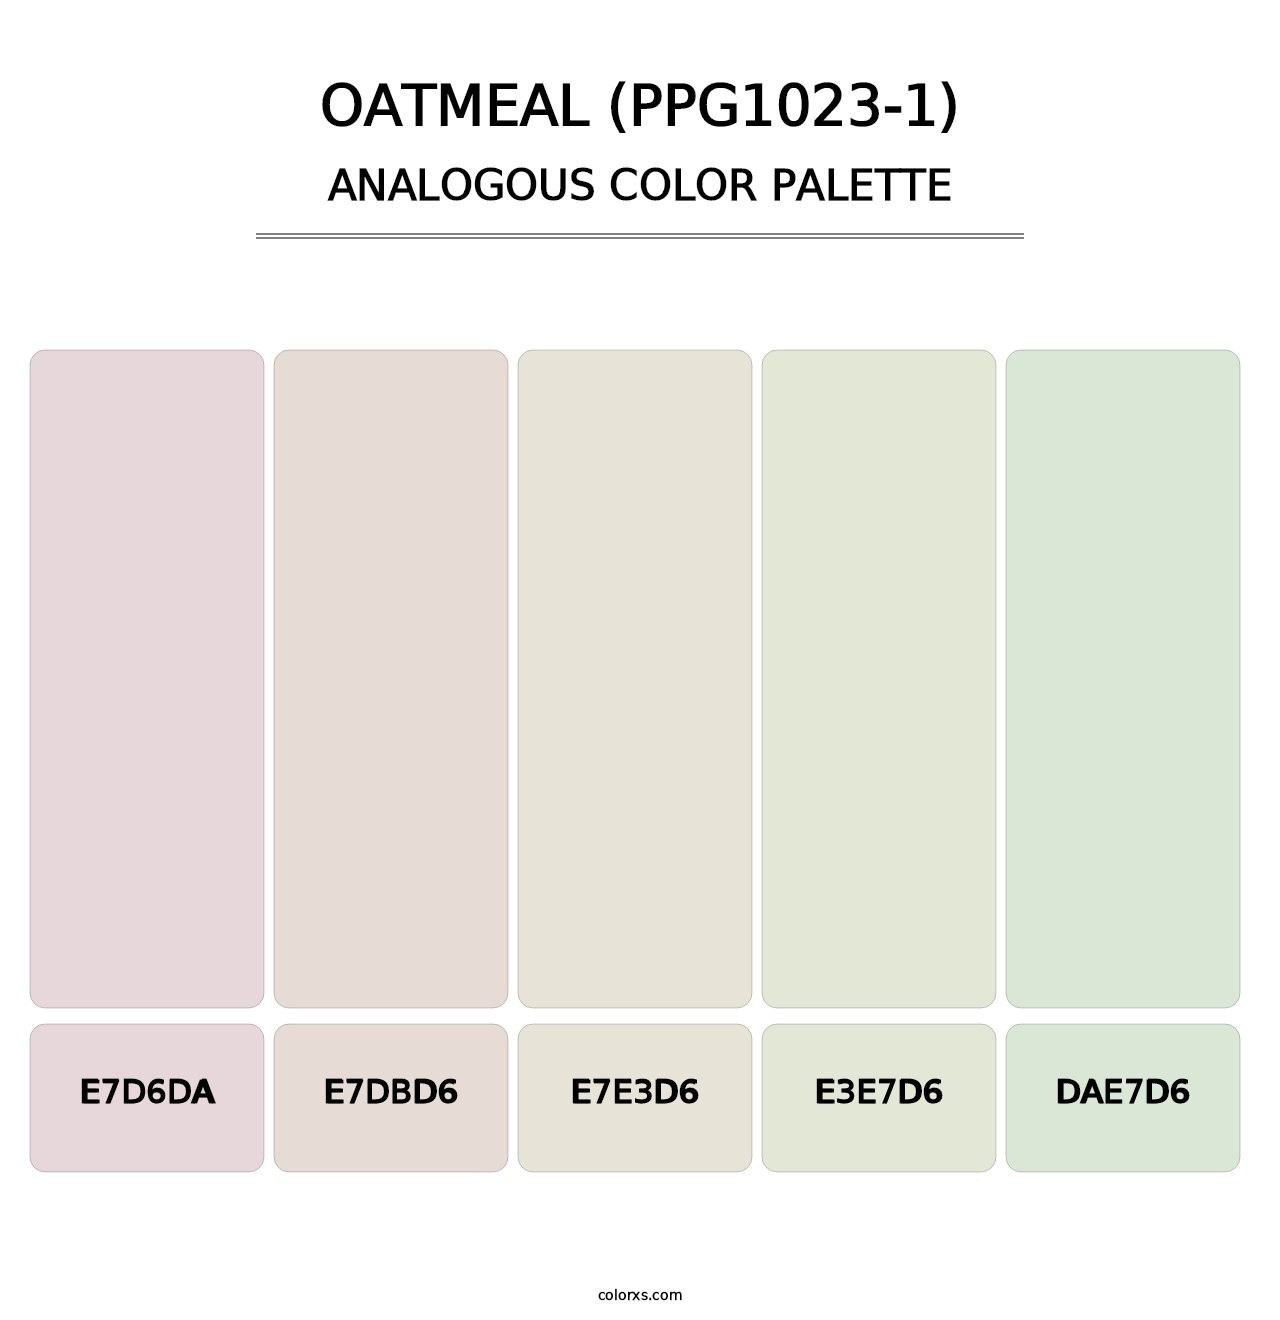 Oatmeal (PPG1023-1) - Analogous Color Palette